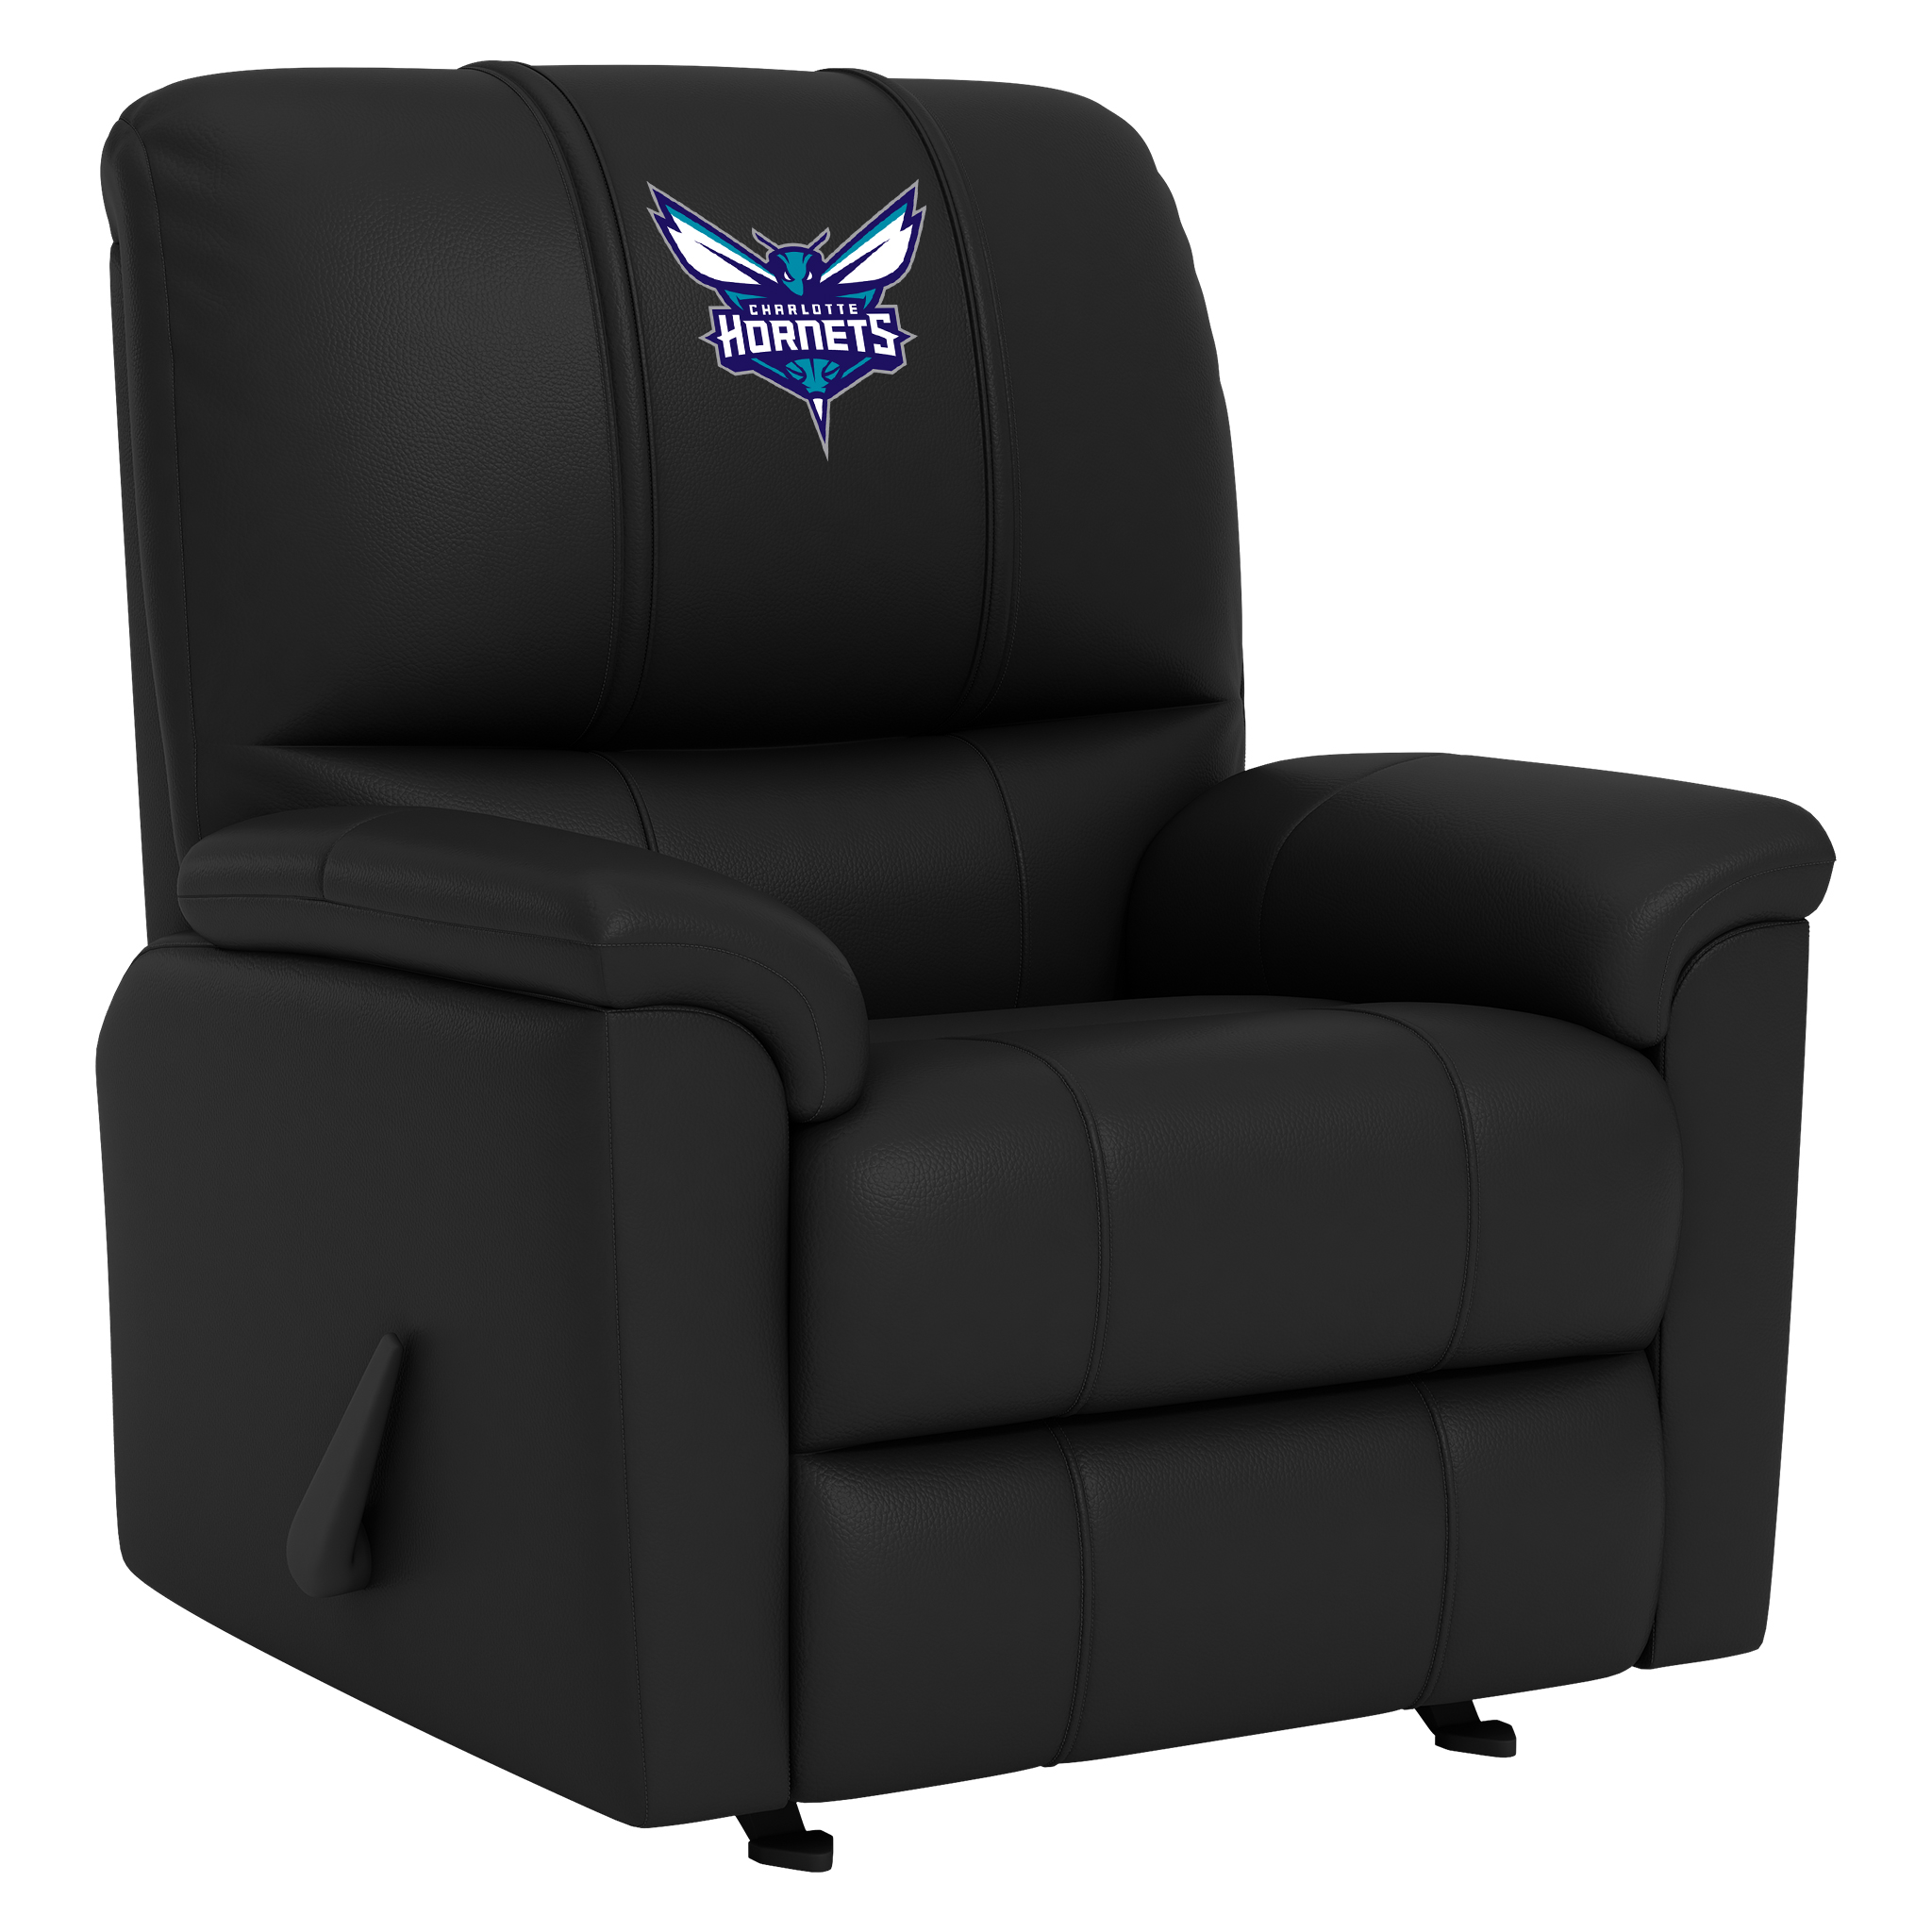 Chevrolet Silver Club Chair with Chevrolet Alternate Logo